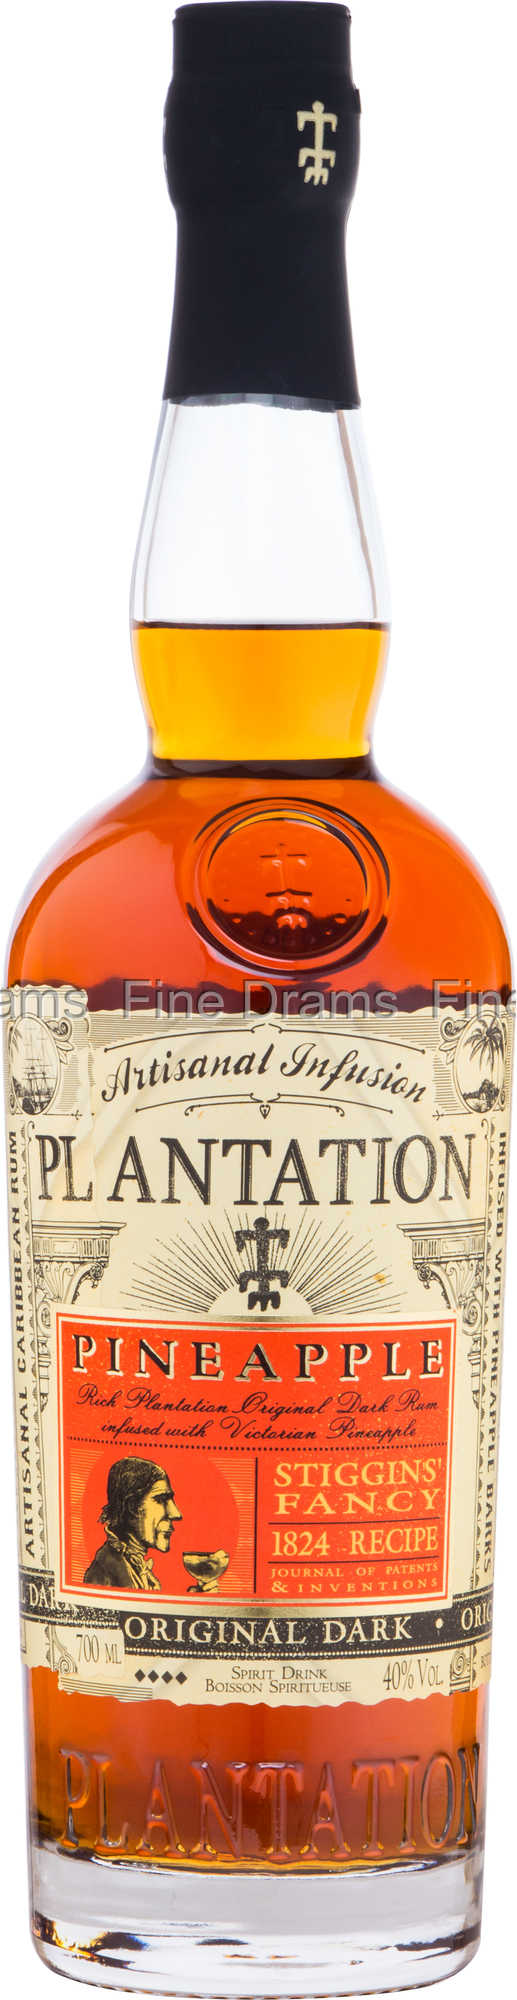 Plantation Pineapple Stiggins' Fancy Rum